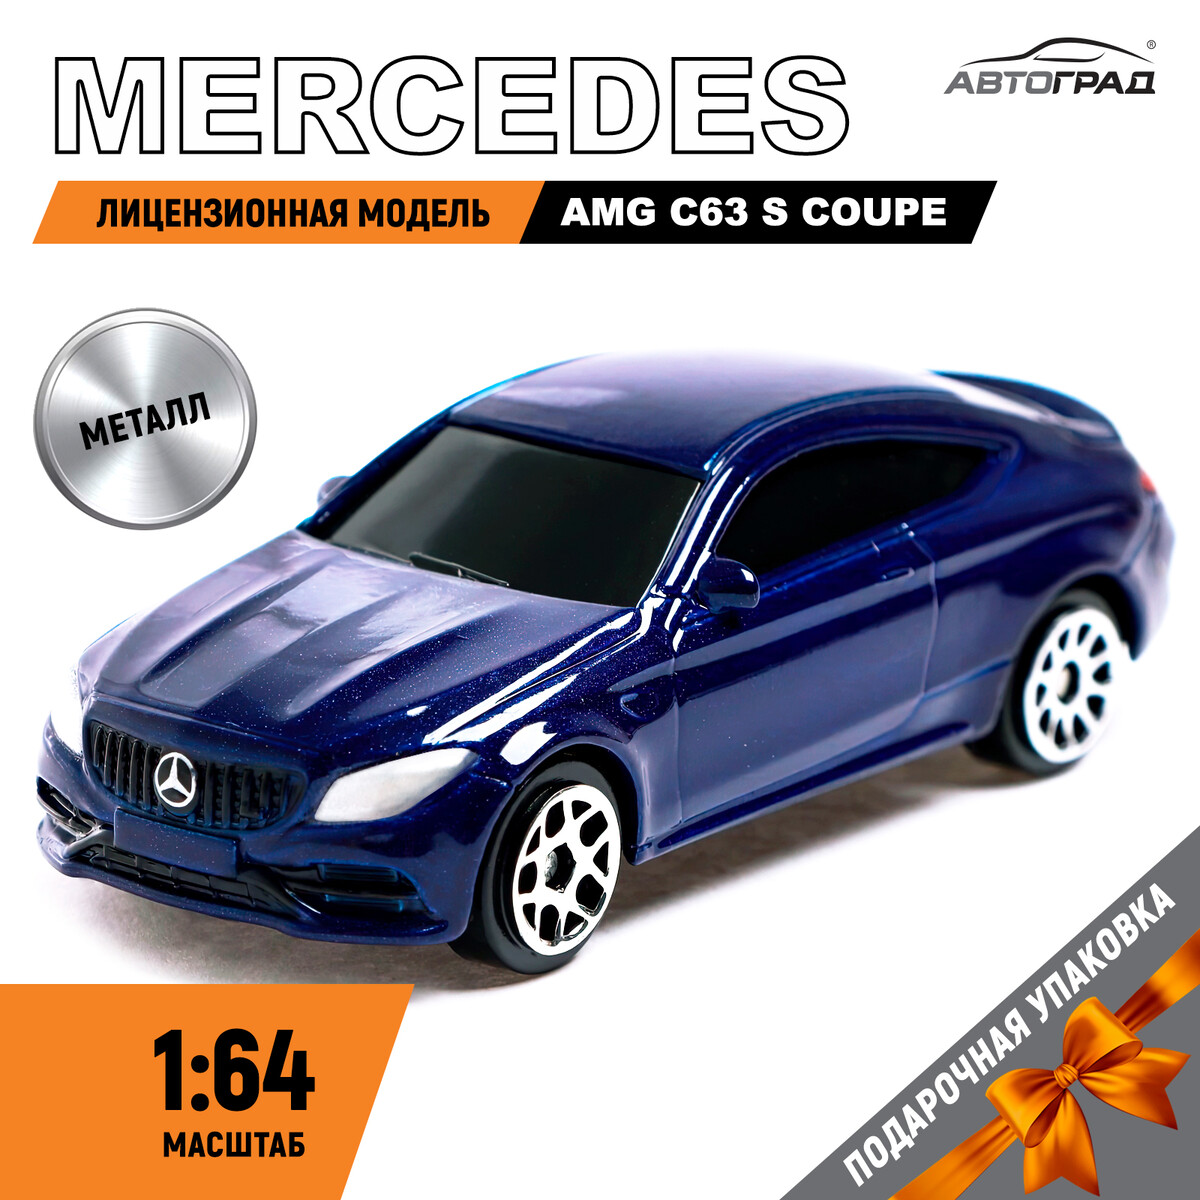 Машина металлическая mercedes-amg c63 s coupe, 1:64, цвет синий